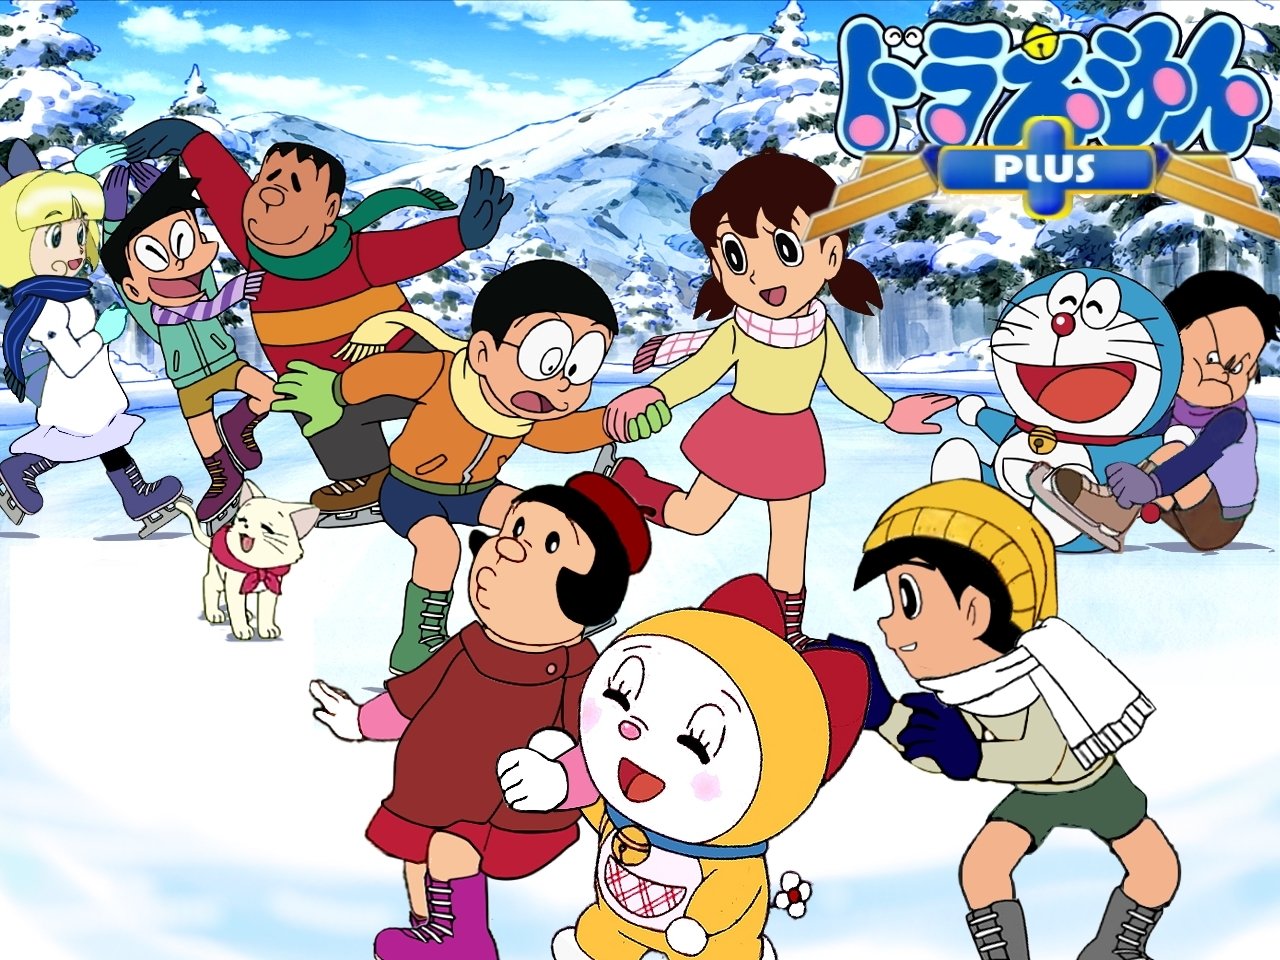 Fathonan Kumpulan Wallpaper Doraemon HD Terbaru Untuk Android Dan PC